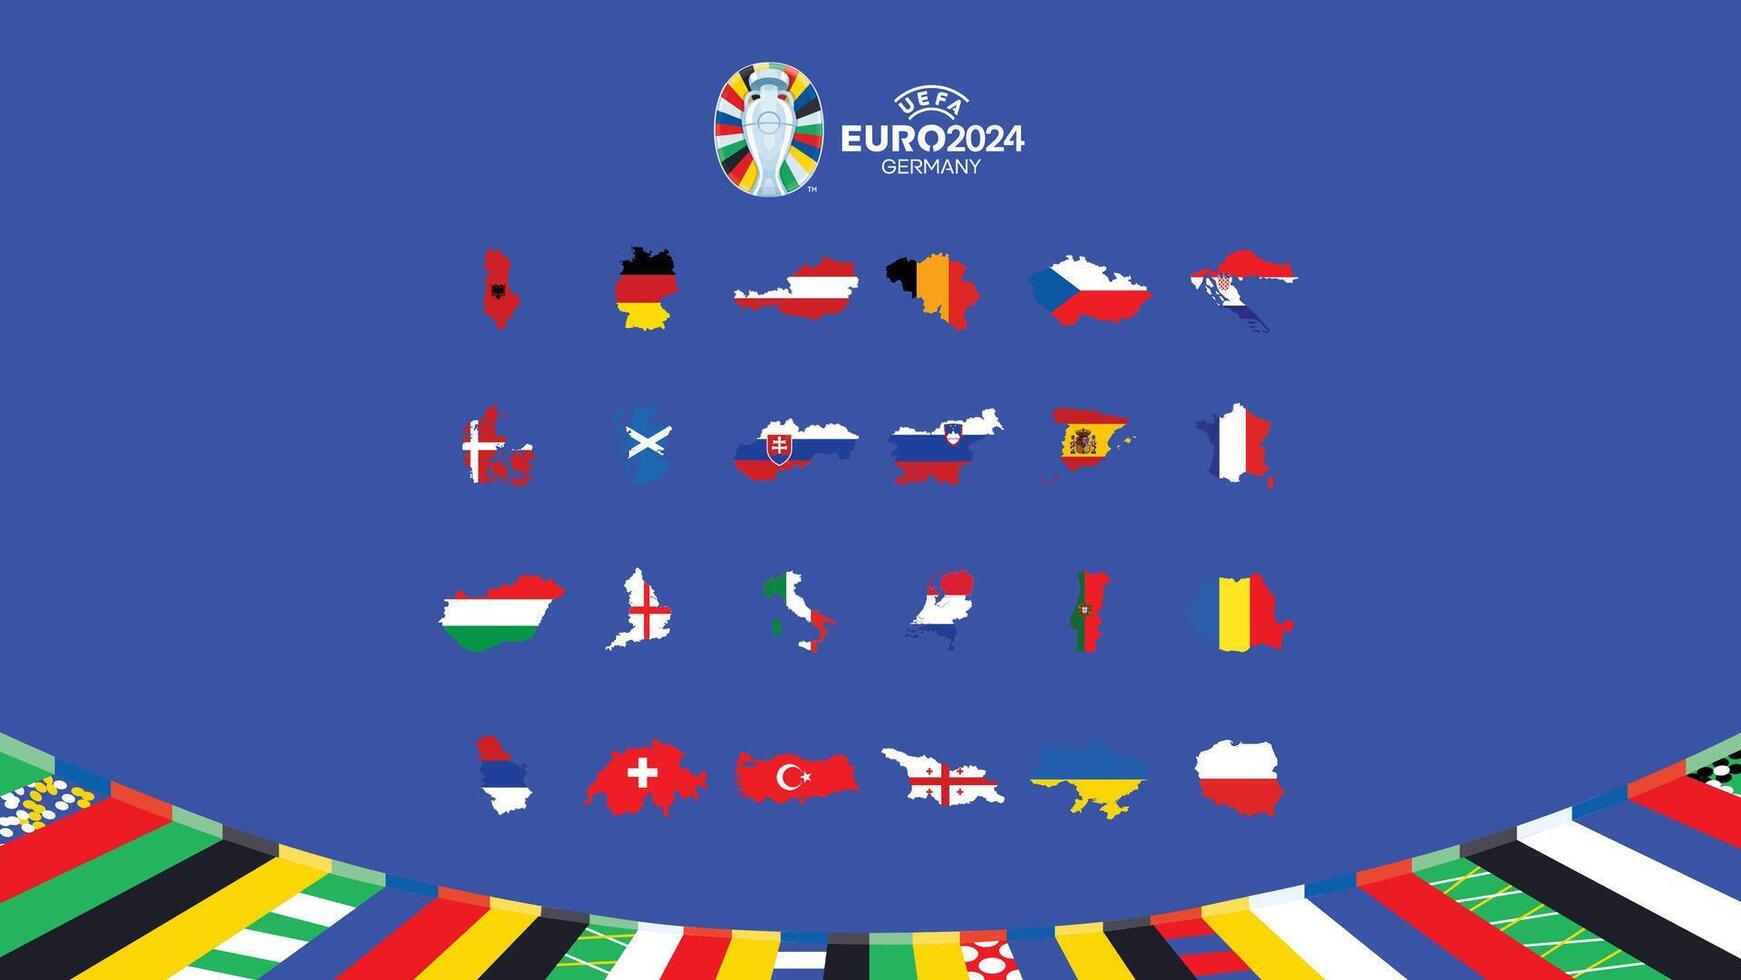 Euro 2024 Germany Emblem Map Design With Official Symbol logo European Football final illustration vector